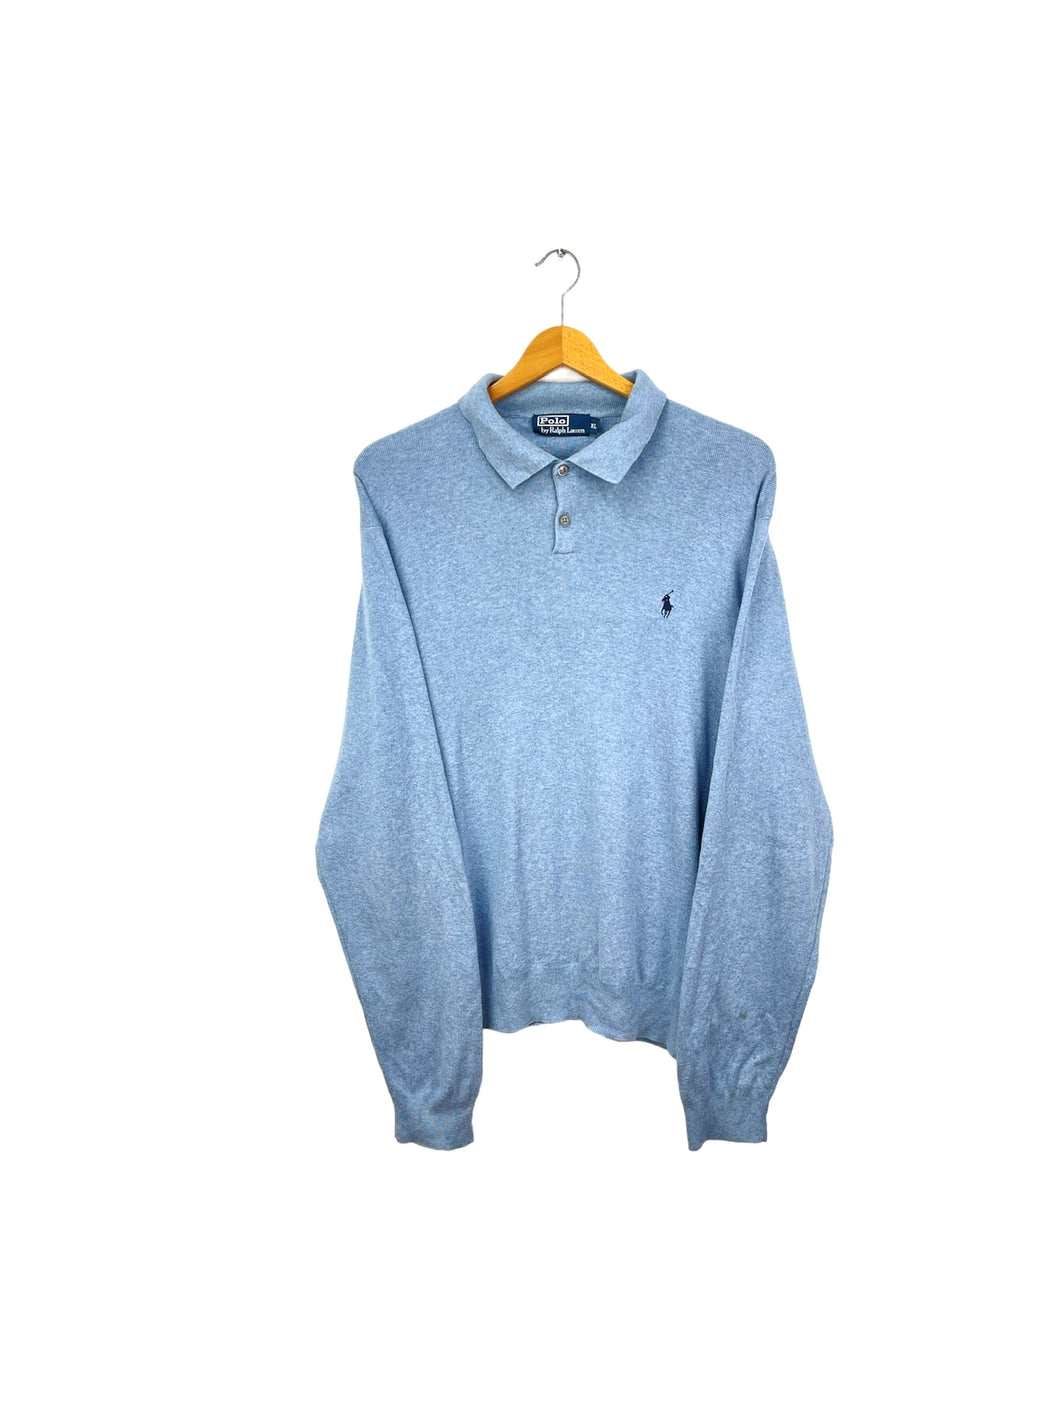 Ralph Lauren Polo Sweatshirt - XLarge